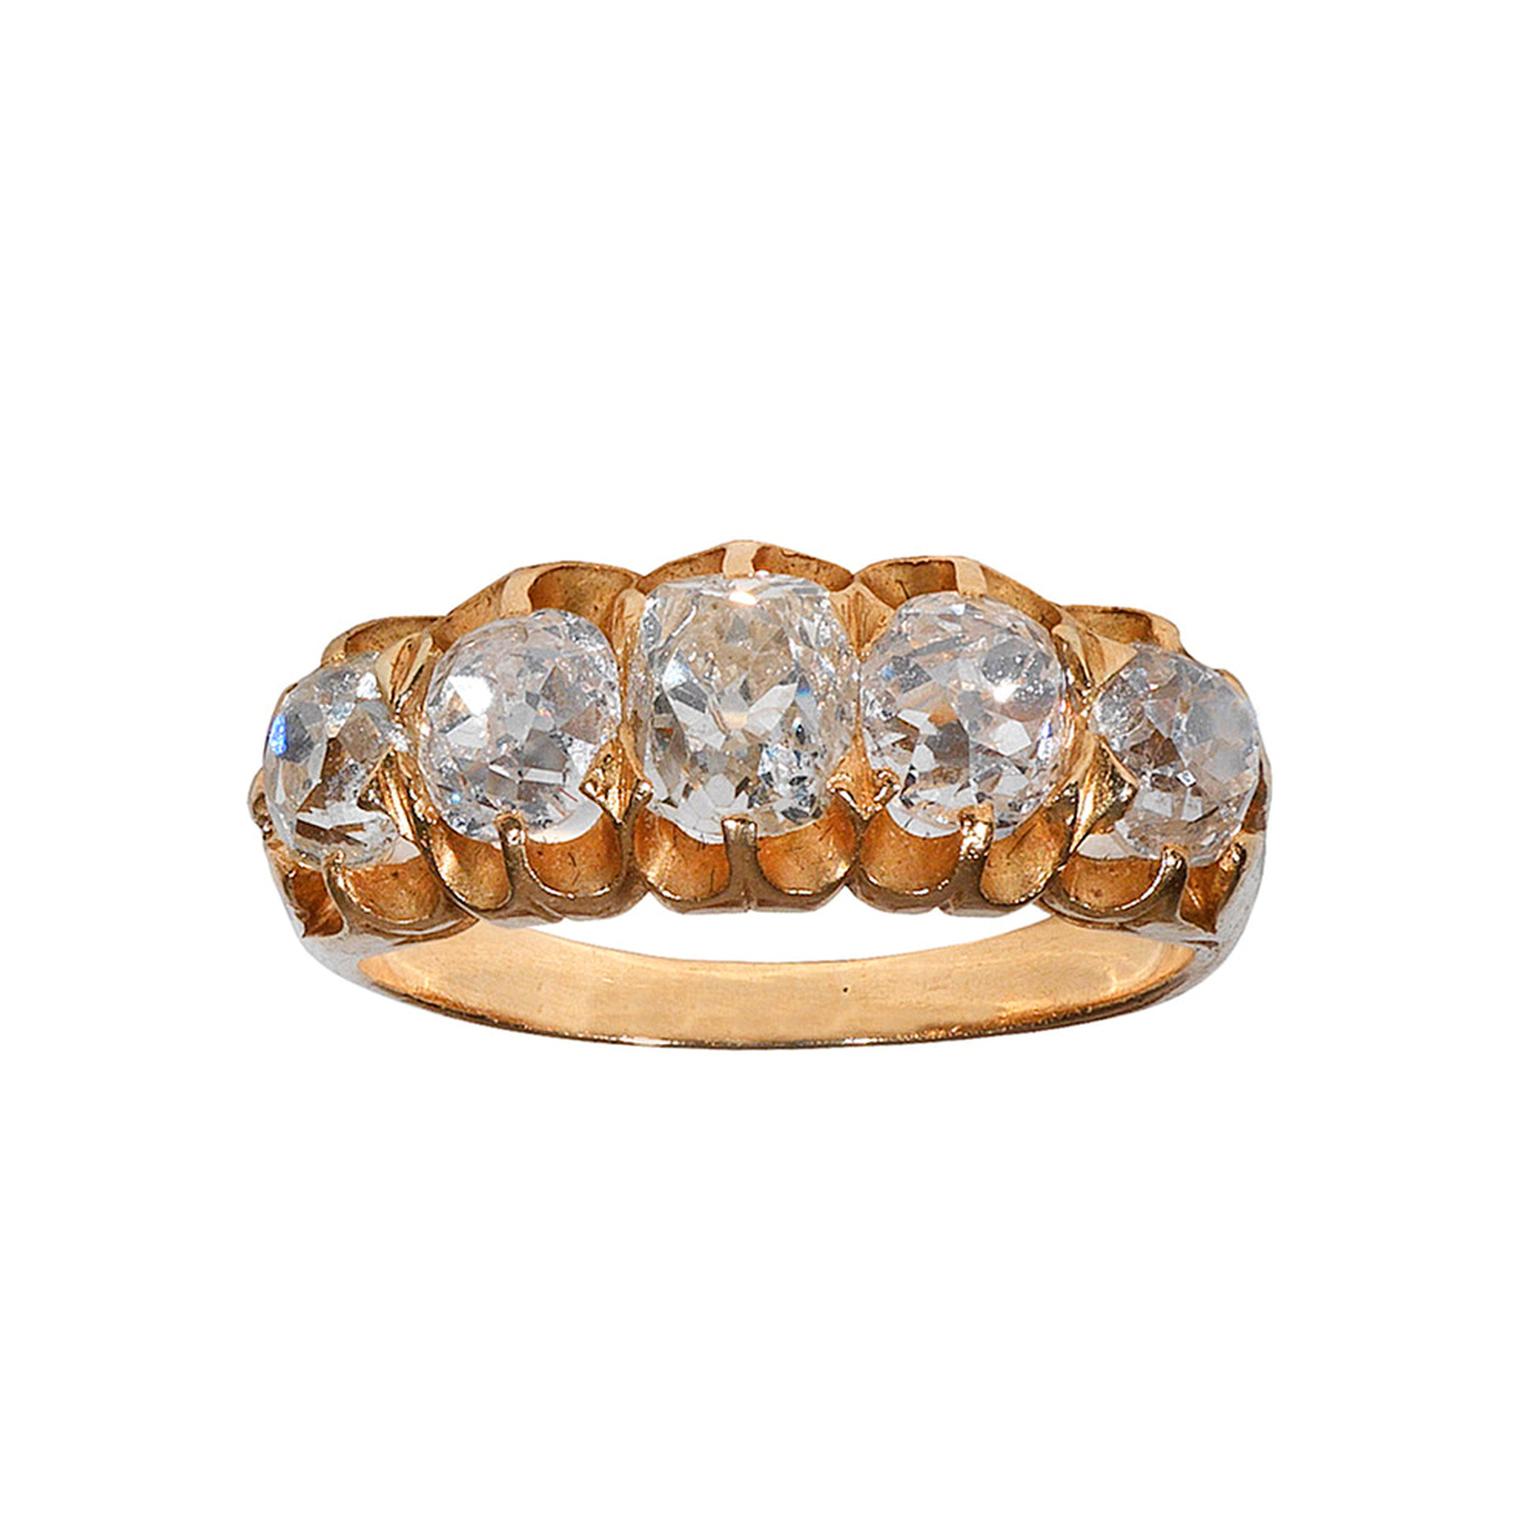 Bernardo Antichita five-stone old mine-cut diamond ring